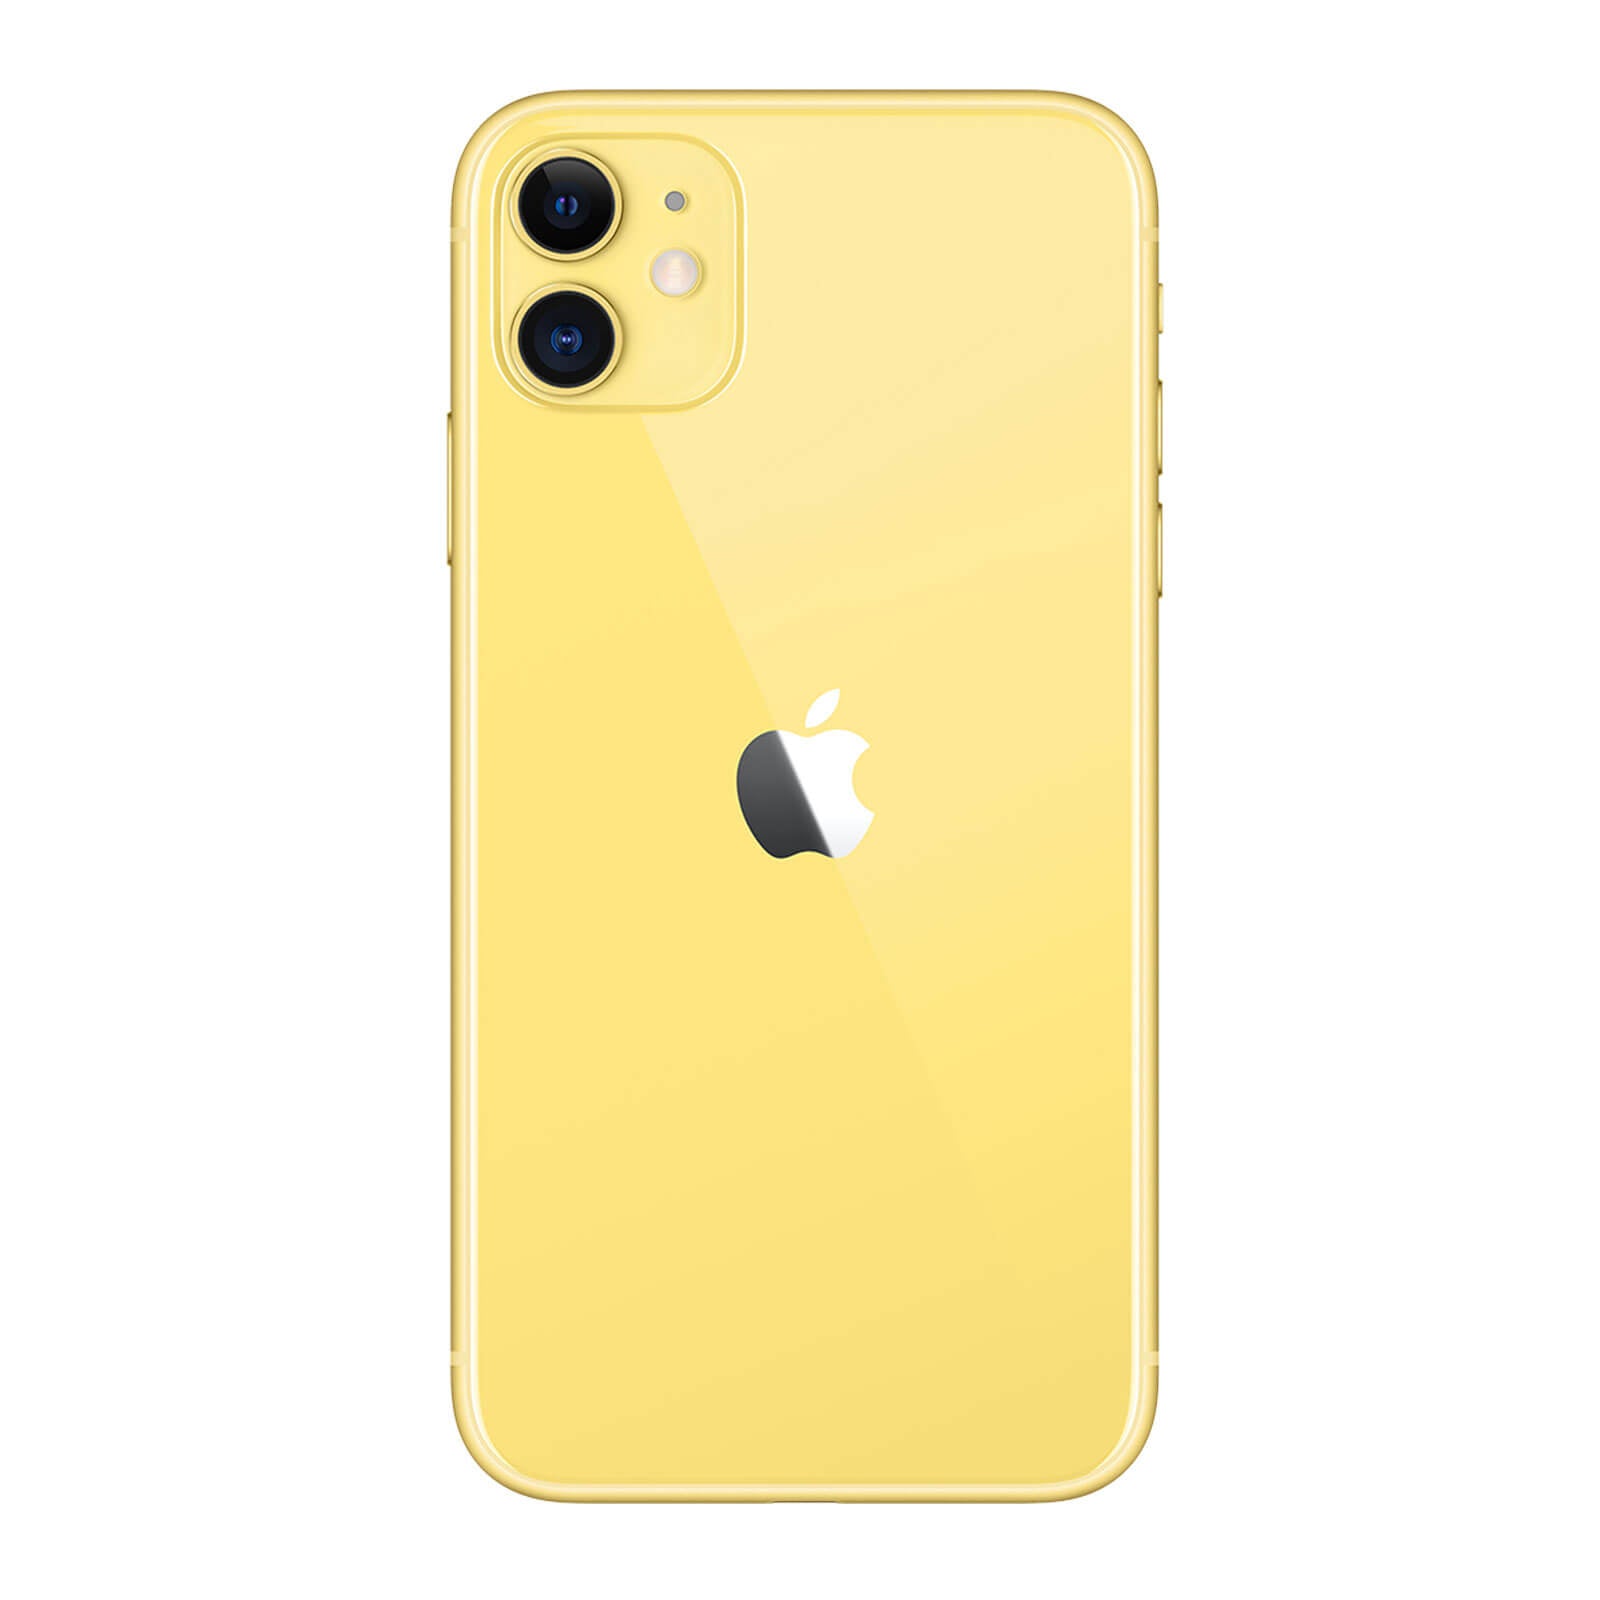 Apple iPhone 11 128GB Yellow Pristine - Verizon